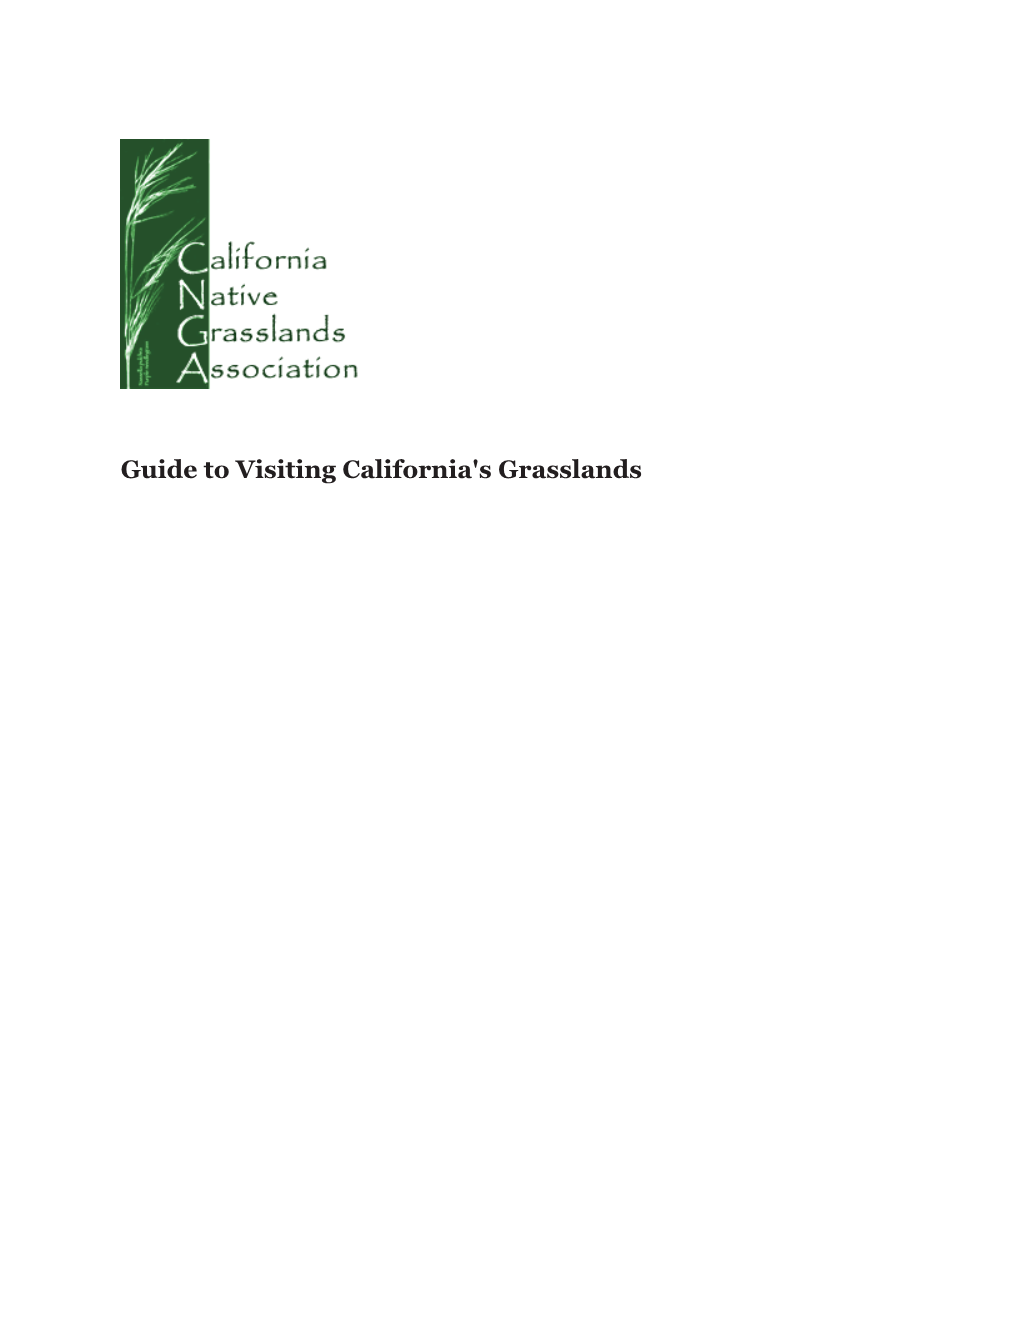 Guide to Visiting California's Grasslands